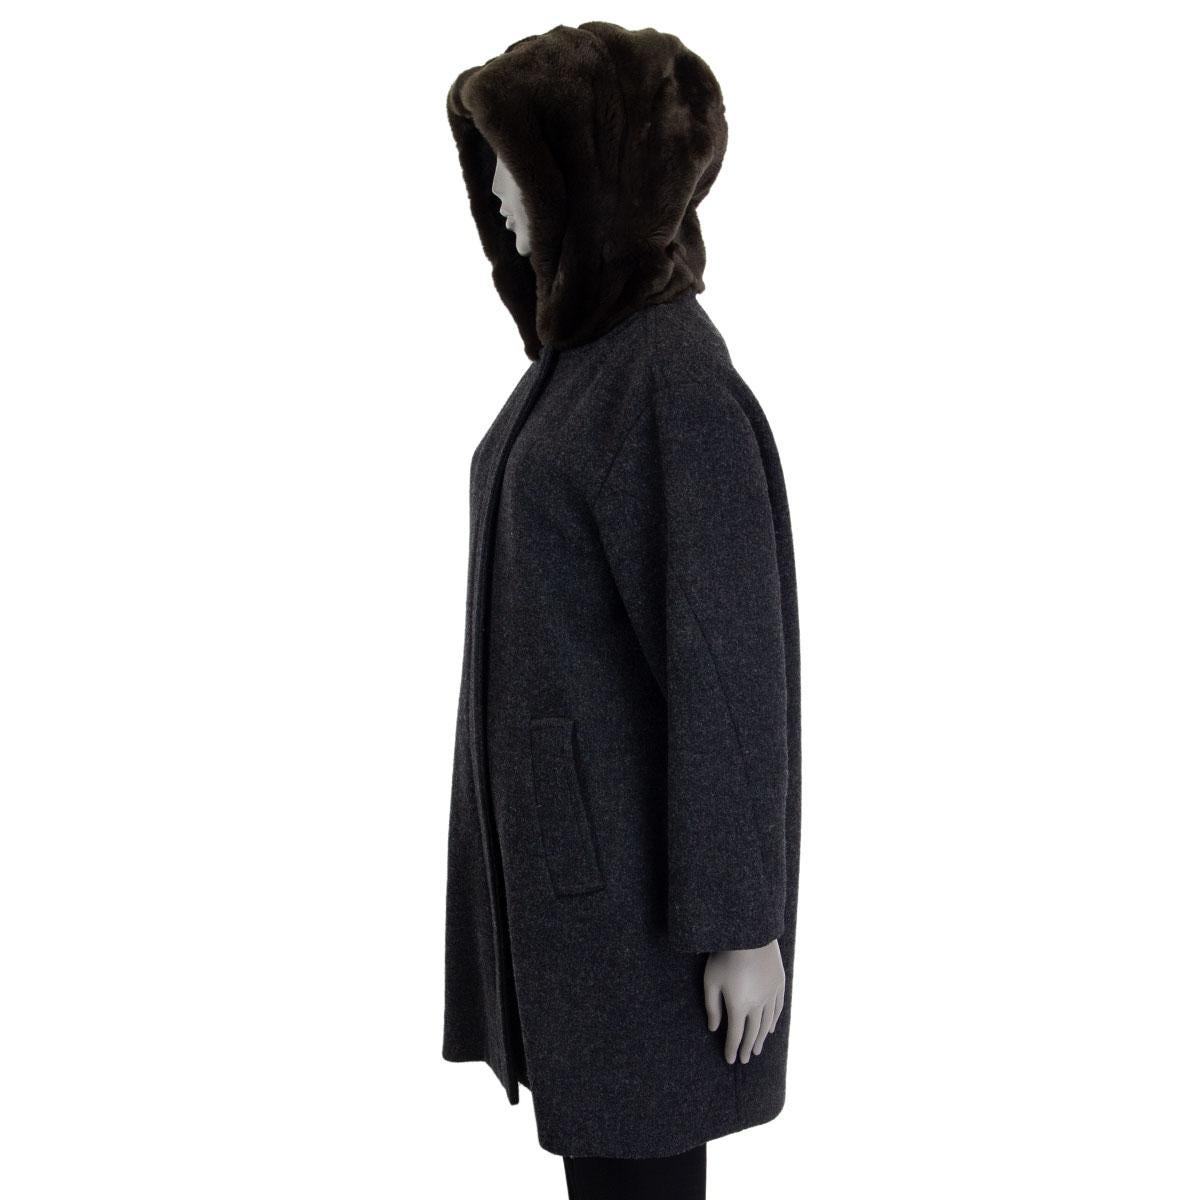 Black MARNI grey wool olive RABBIT FUR HOODED Coat Jacket 42 M